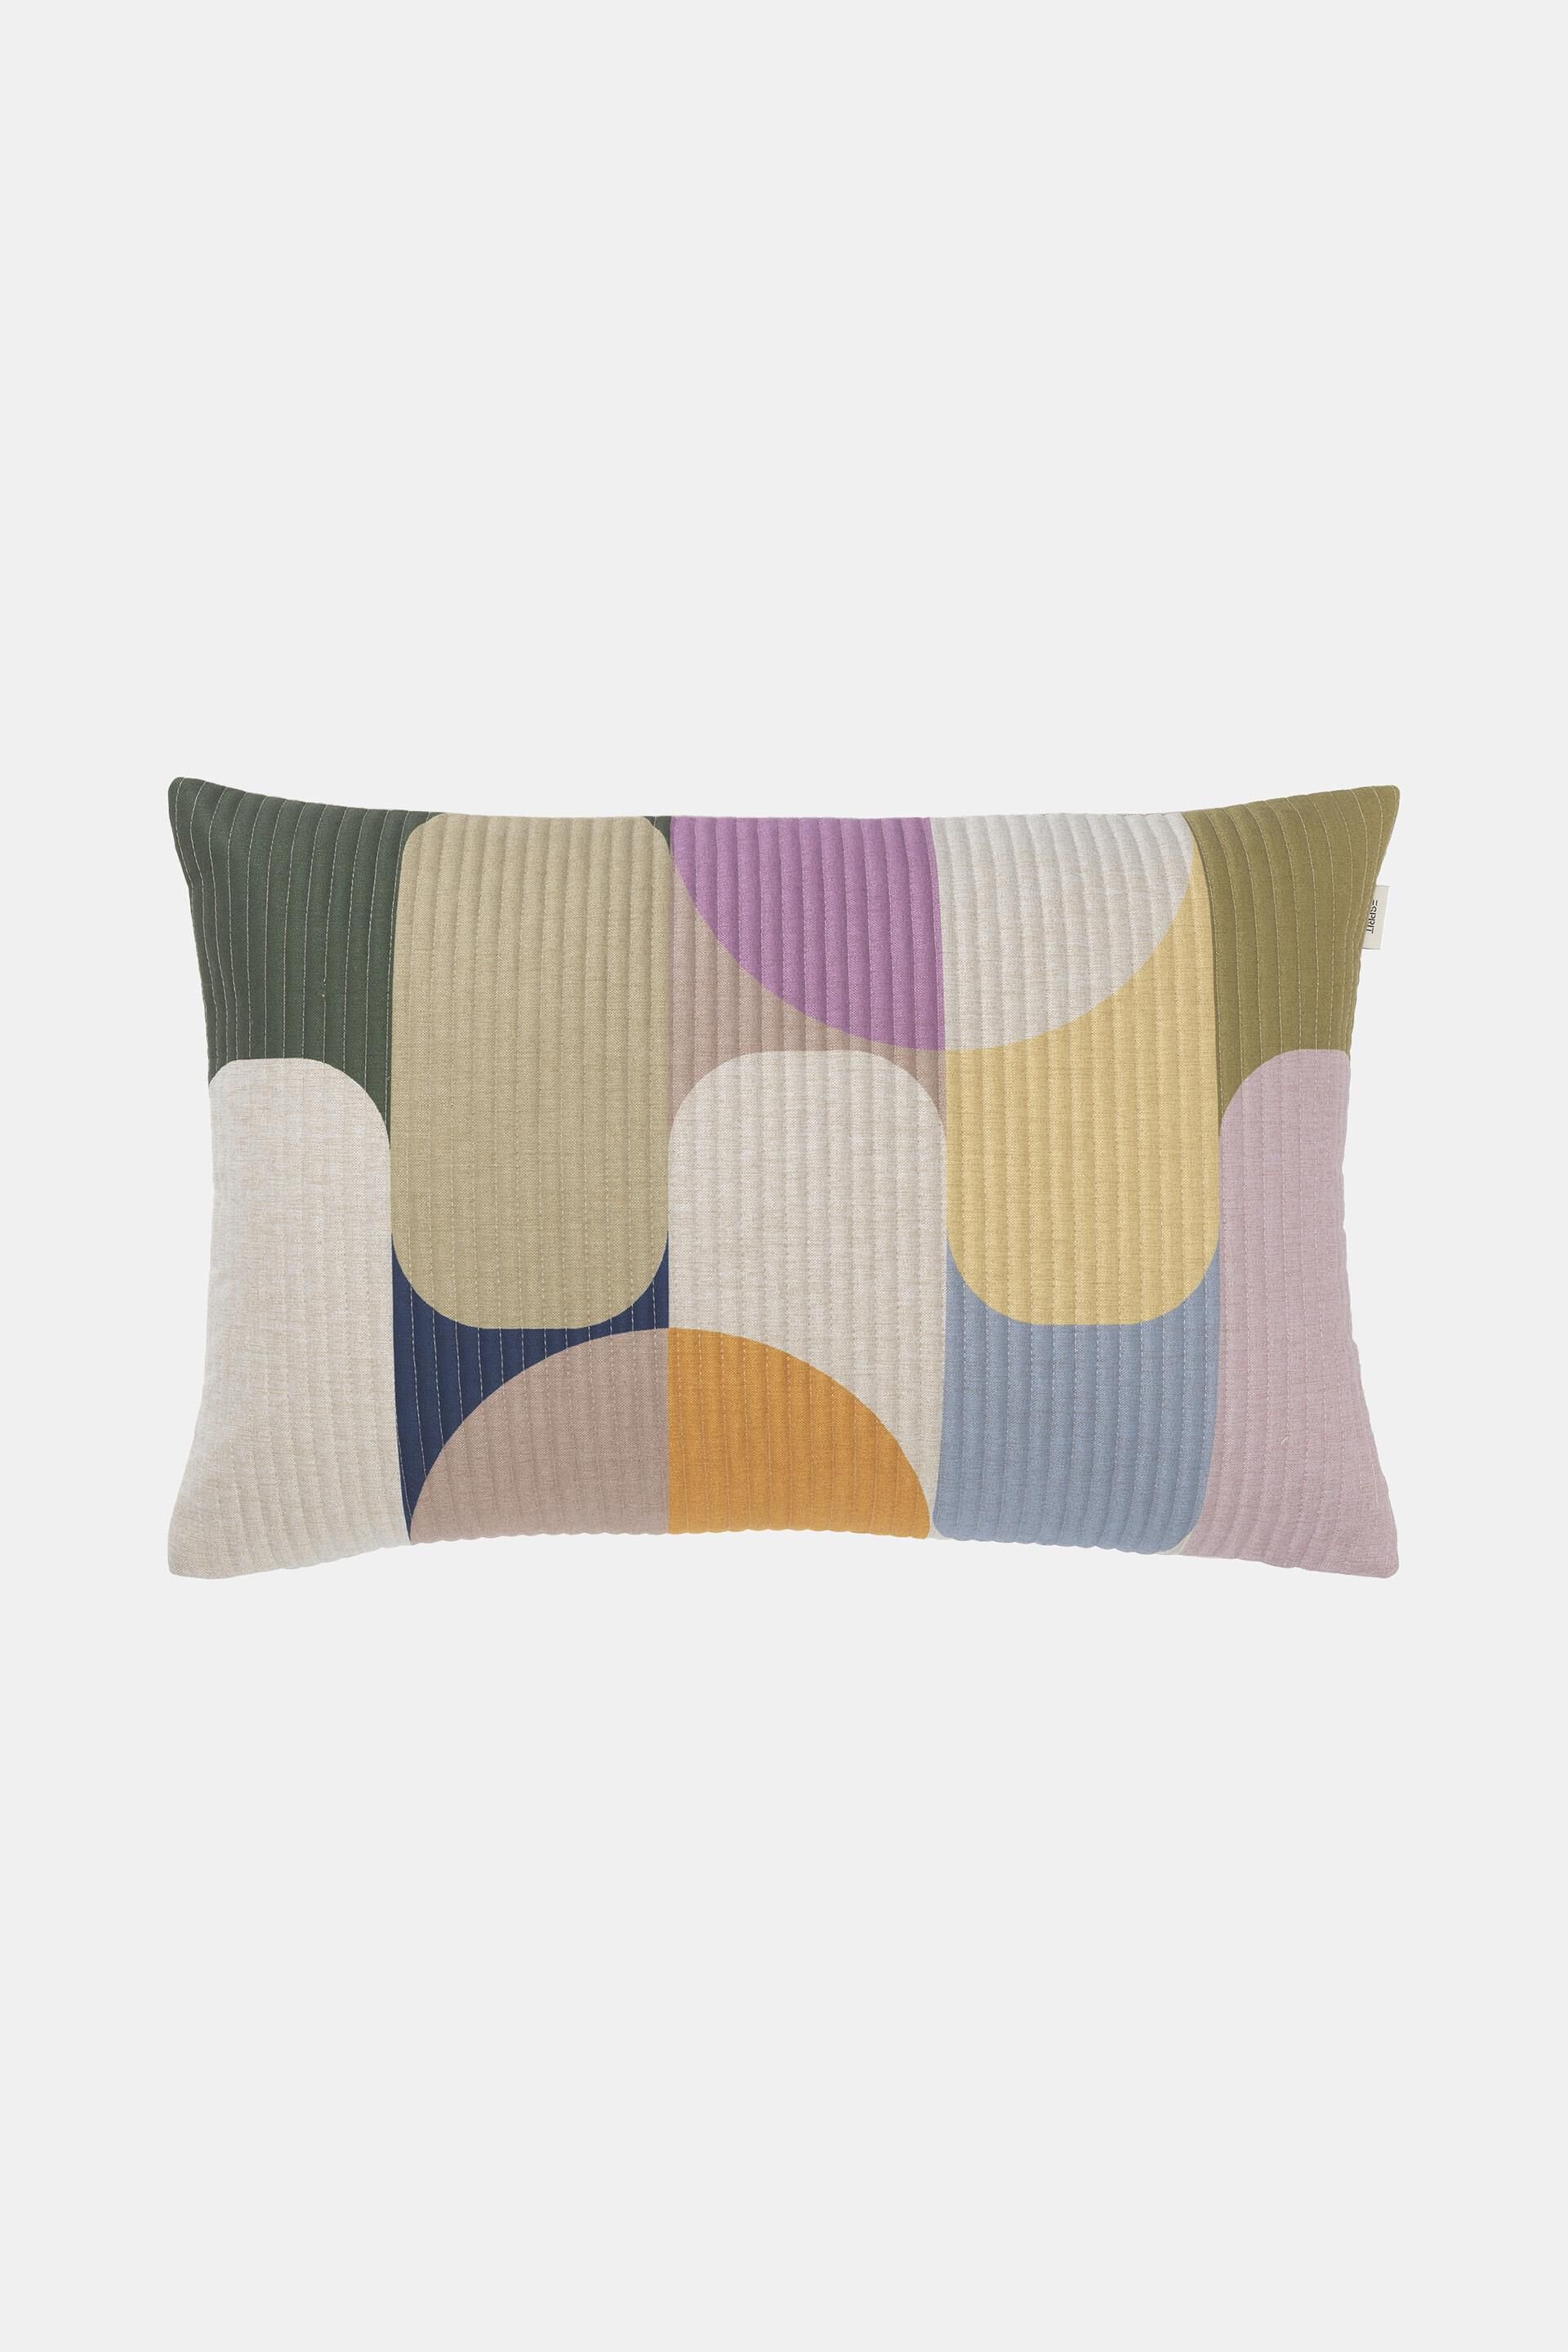 Esprit Cushion pattern cover multi-coloured retro with